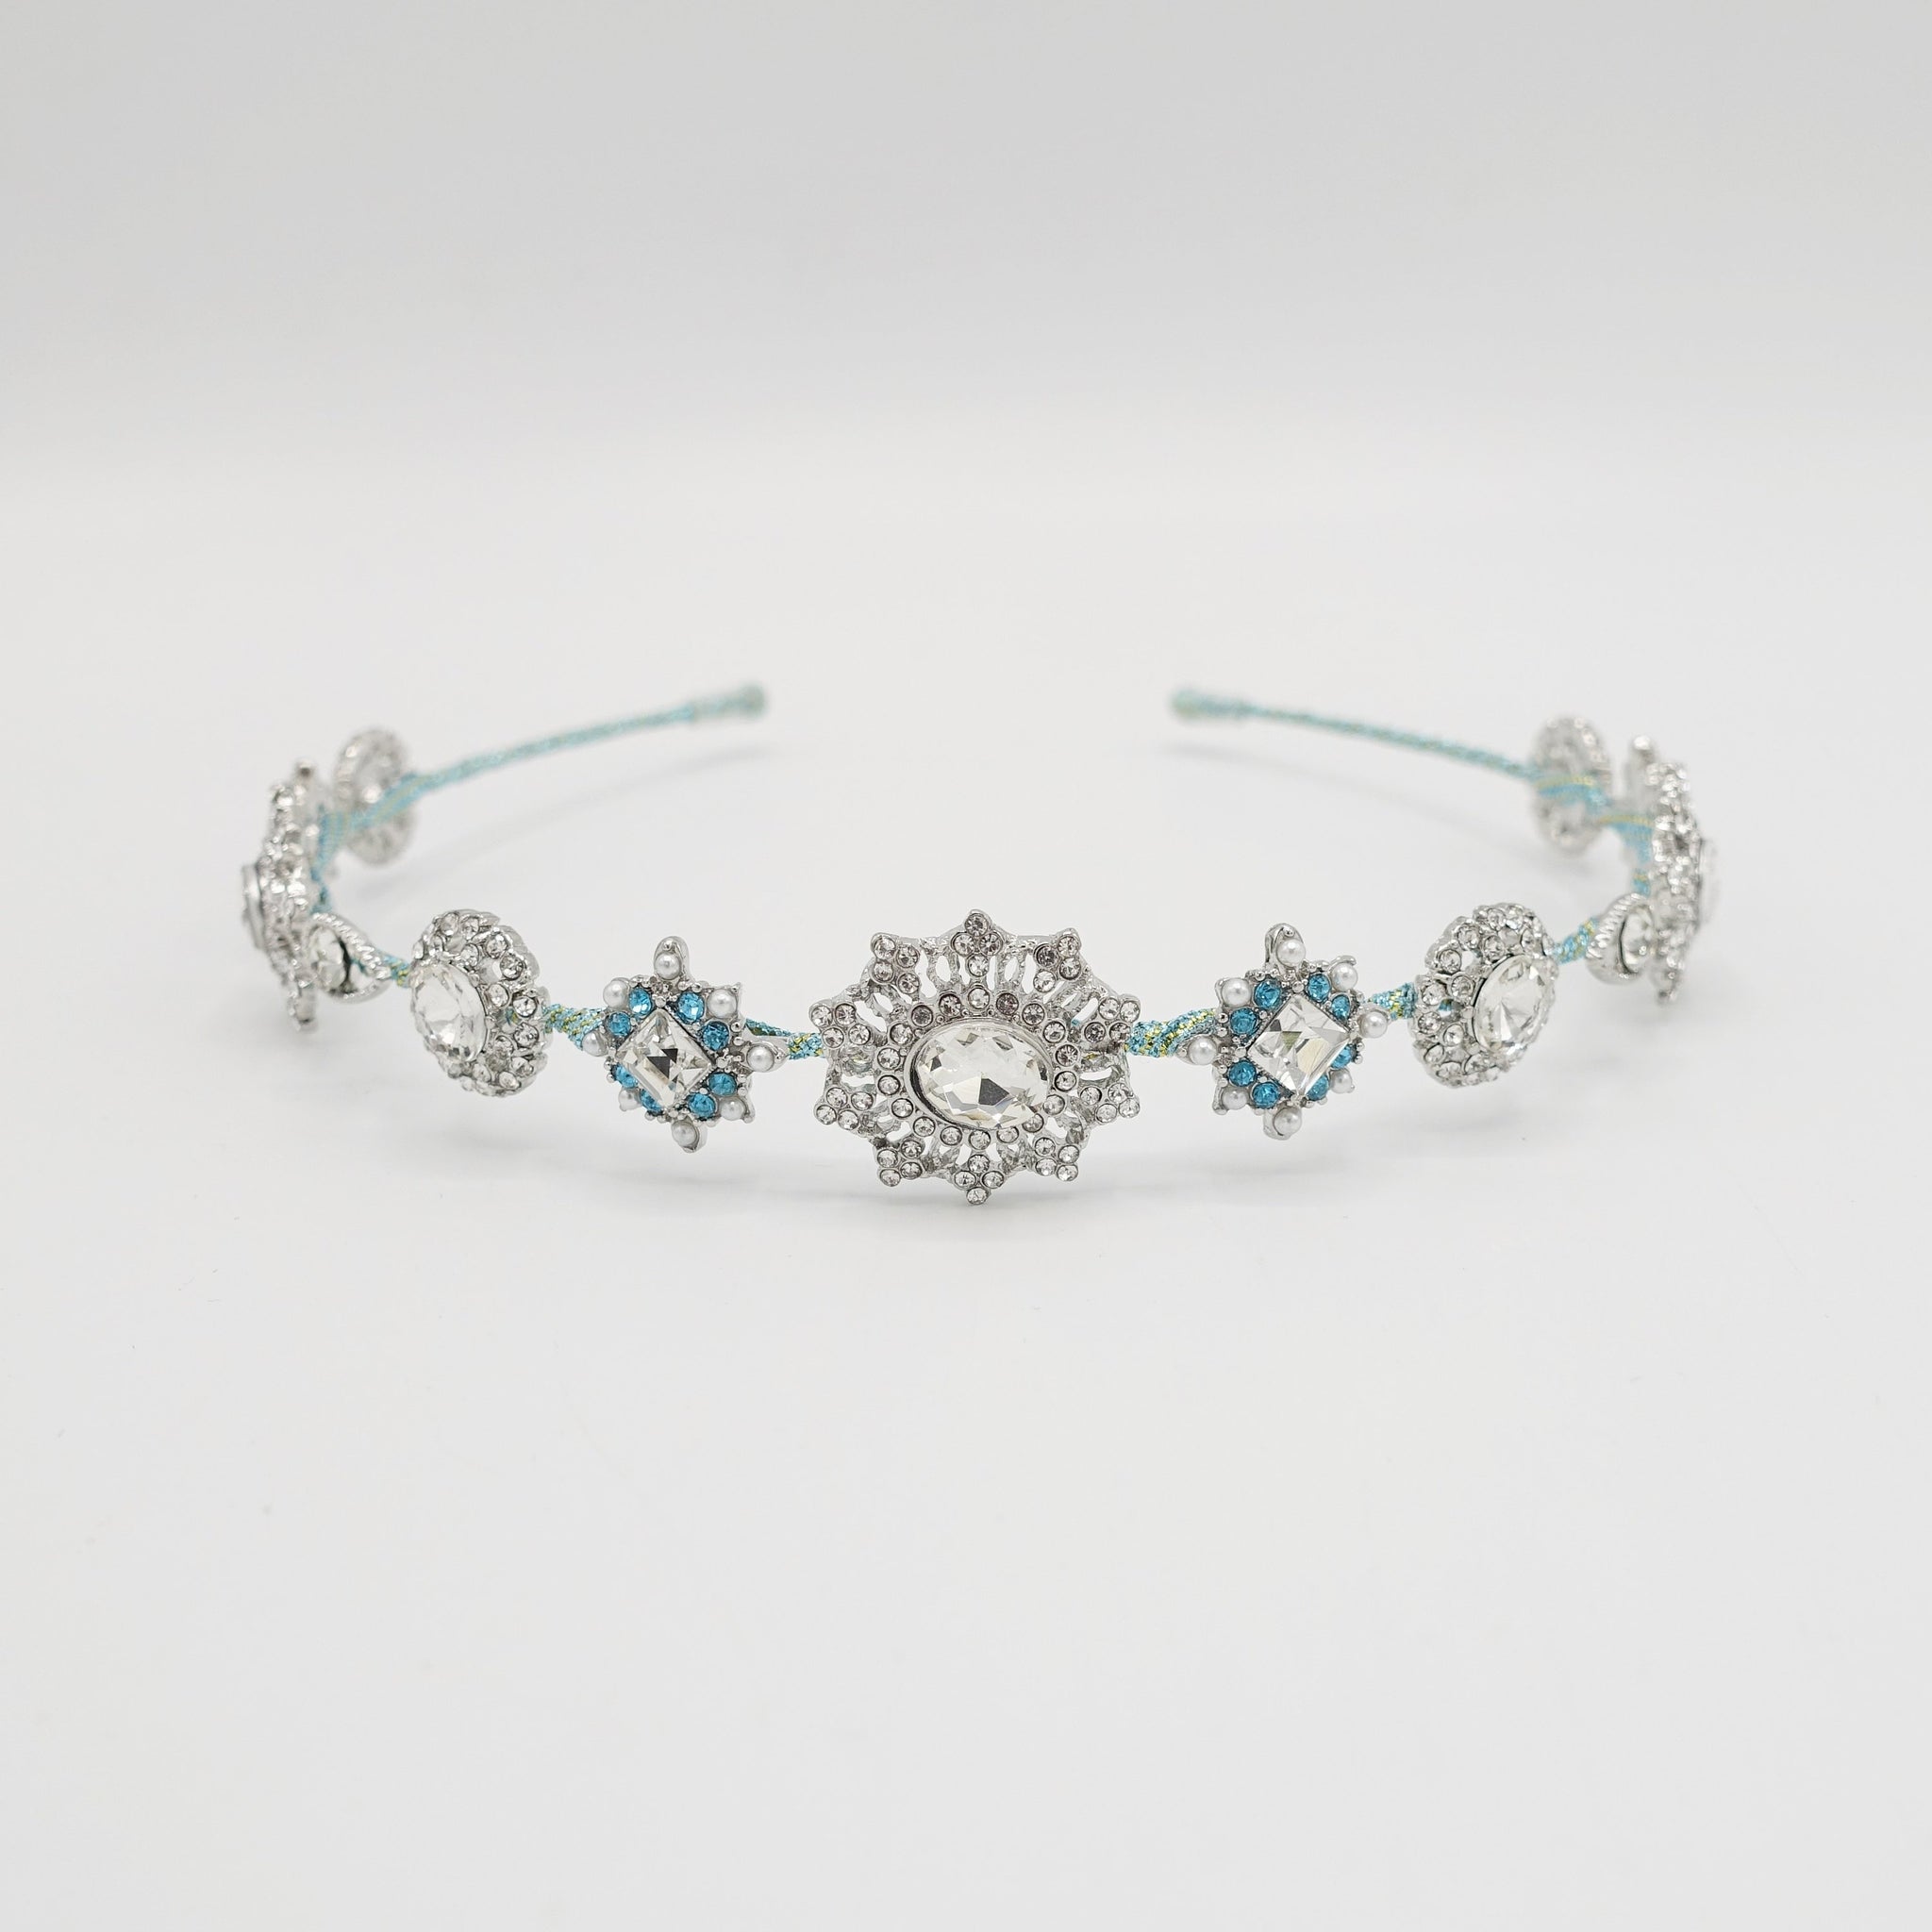 VeryShine Headband Crystal baroque pattern rhinestone embellished metal thin headband